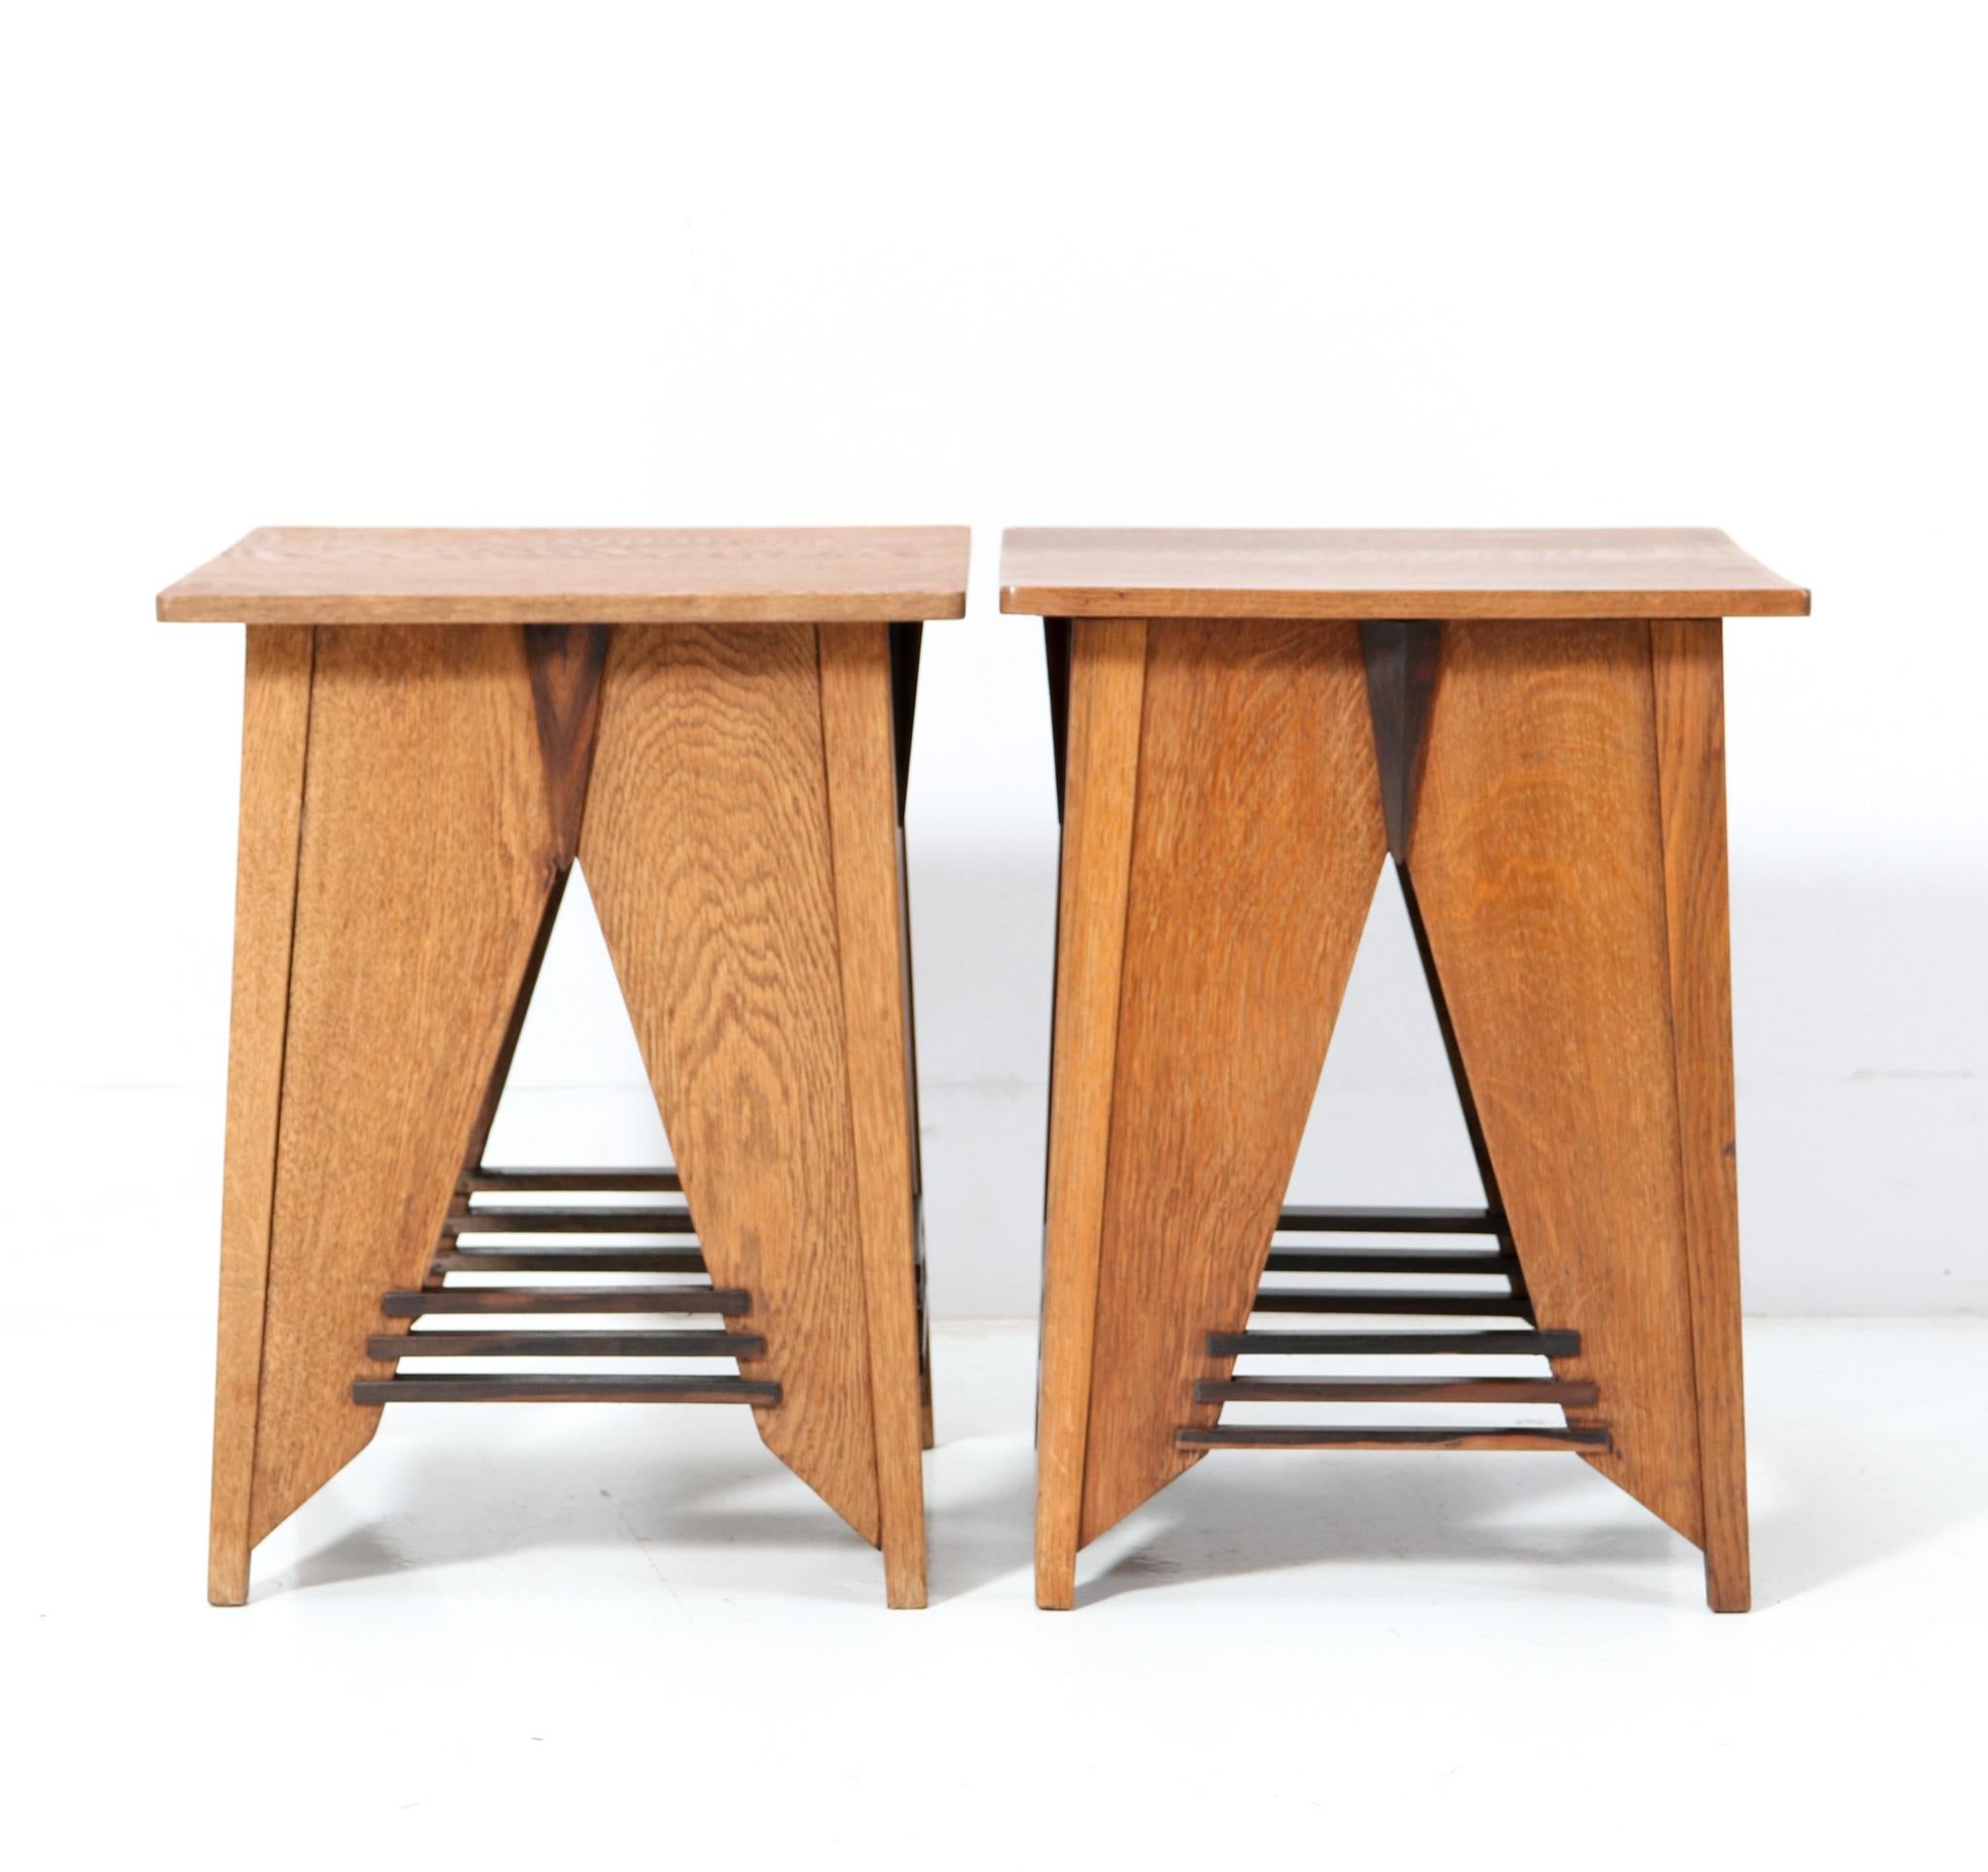 Two Oak Art Deco Modernist Side Tables by P.E.L. Izeren for De Genneper Molen In Good Condition For Sale In Amsterdam, NL